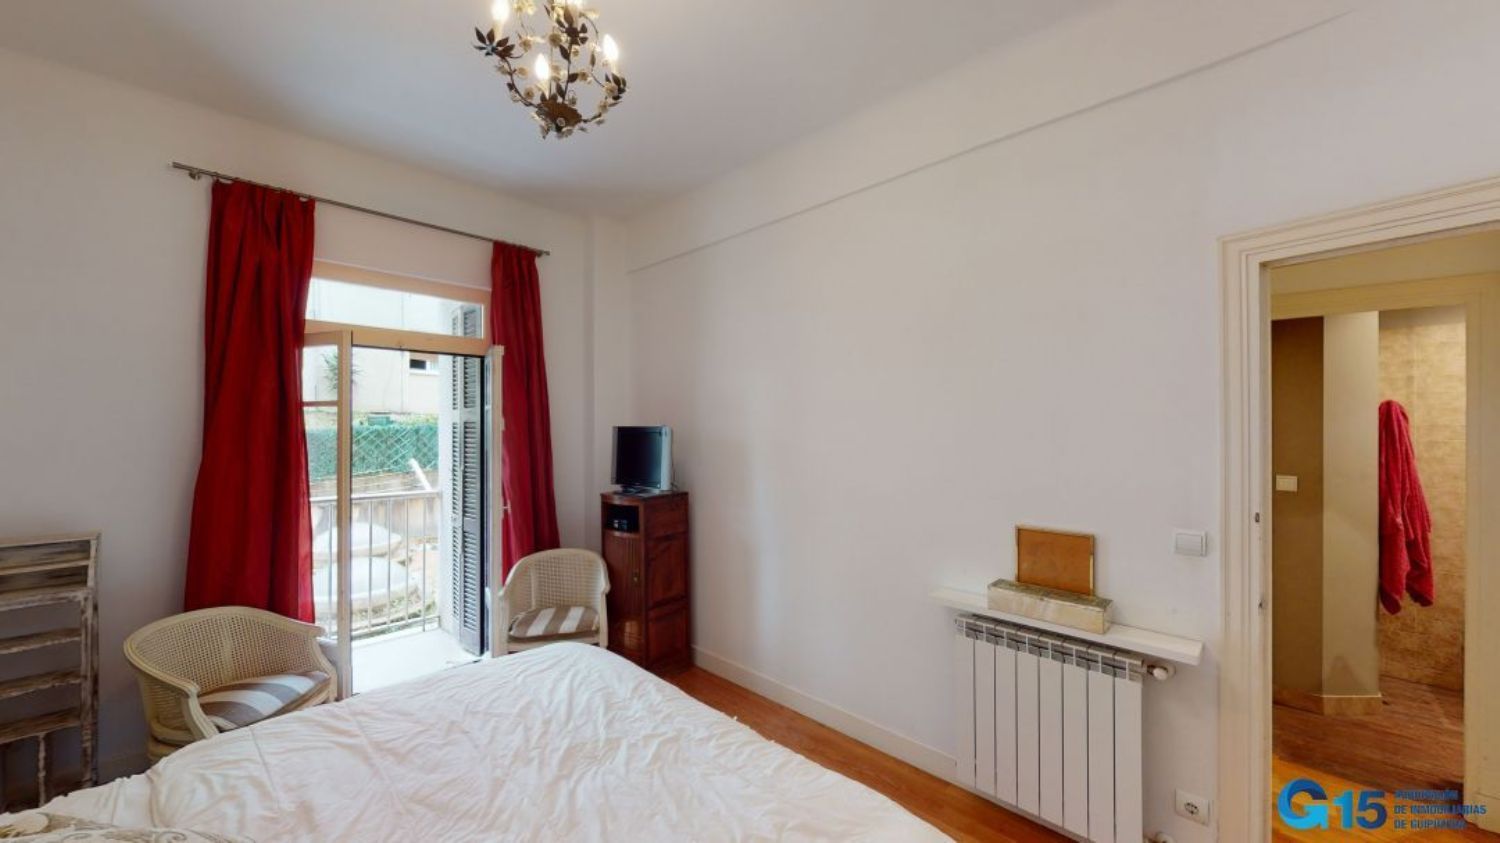 Apartment for sale on the seafront in Zurriola Hiribidea, in Donostia-San Sebastian